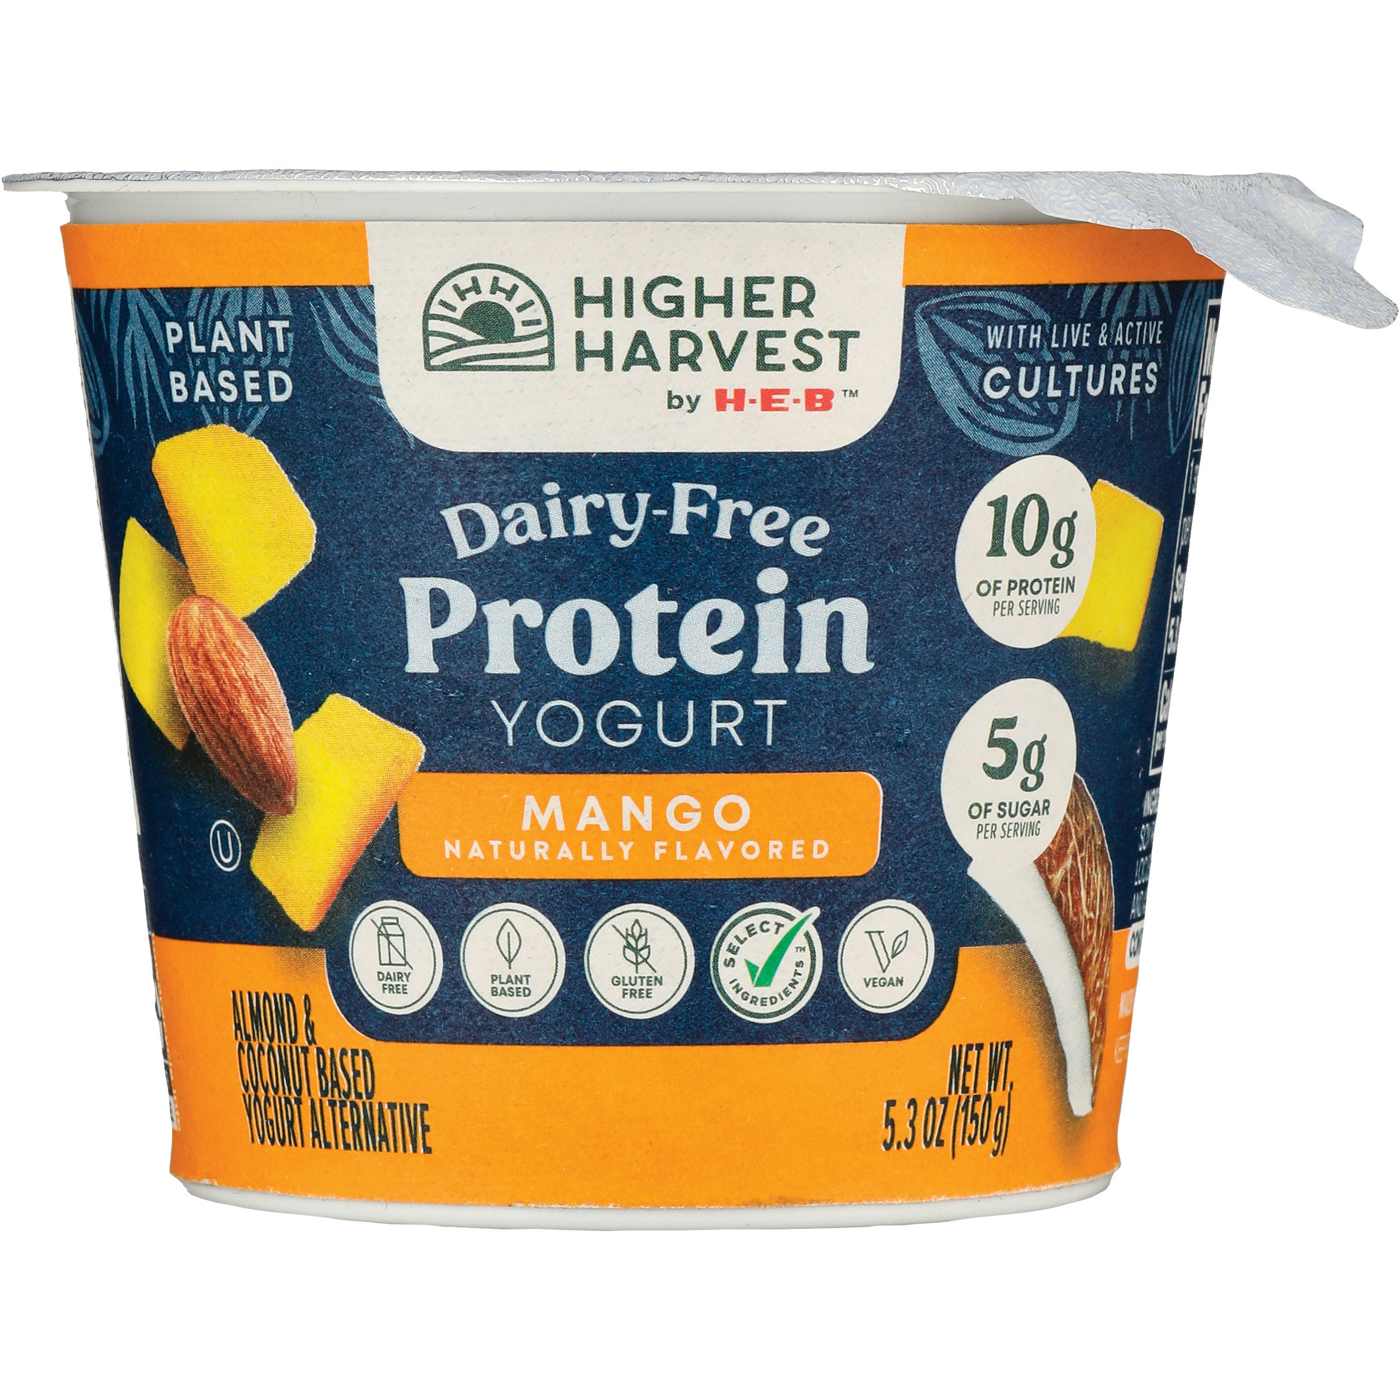 Higher Harvest by H-E-B Dairy-Free 10g Protein Yogurt – Mango; image 1 of 3